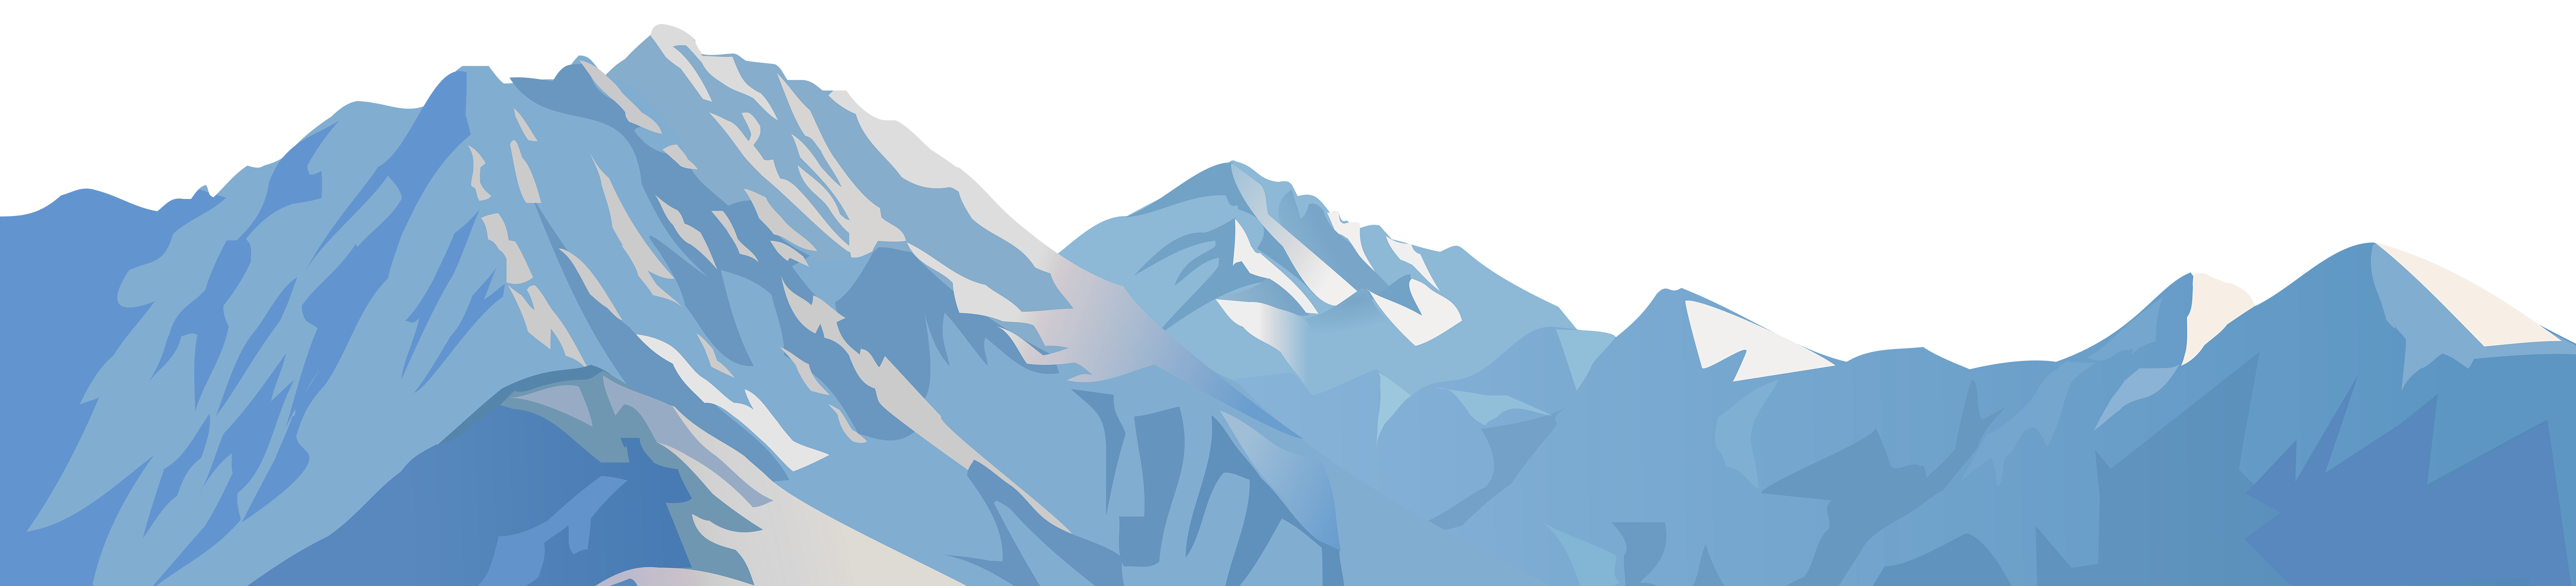 Water clipart mountain. Snowy transparent clip art